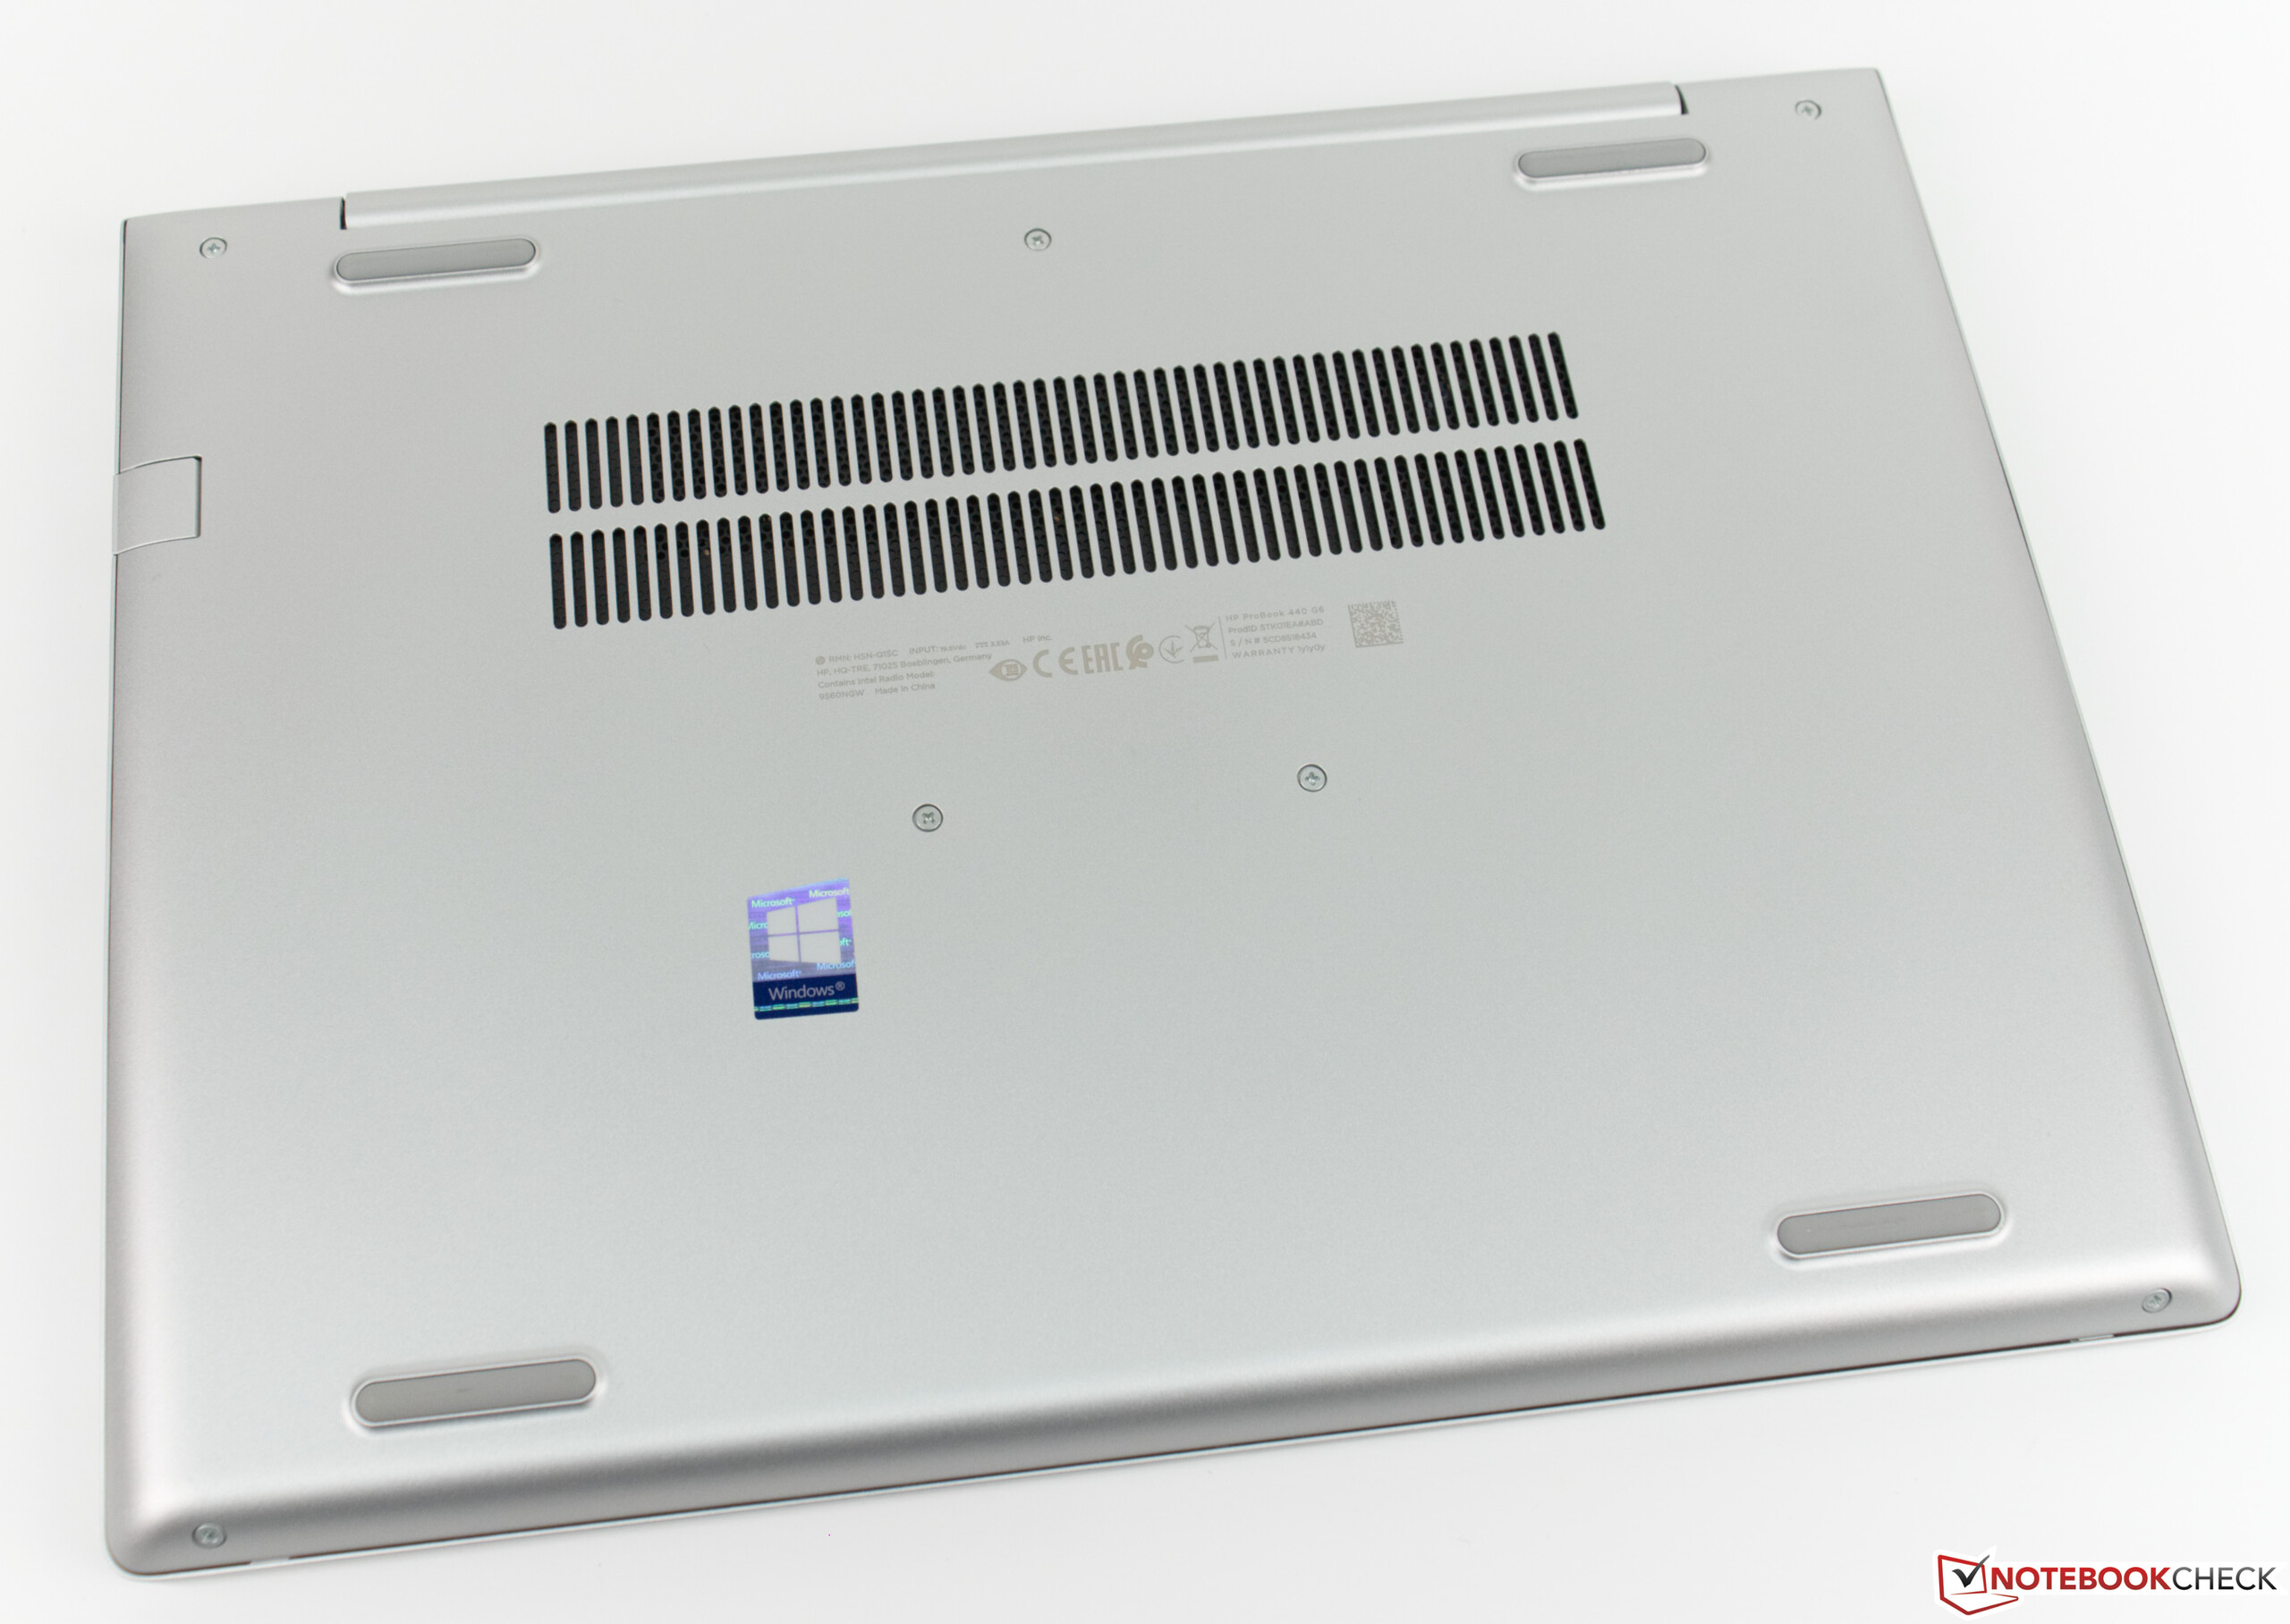 Test: HP ProBook 440 G6 (i7, 512 GB, FHD) Laptop (Sammanfattning 